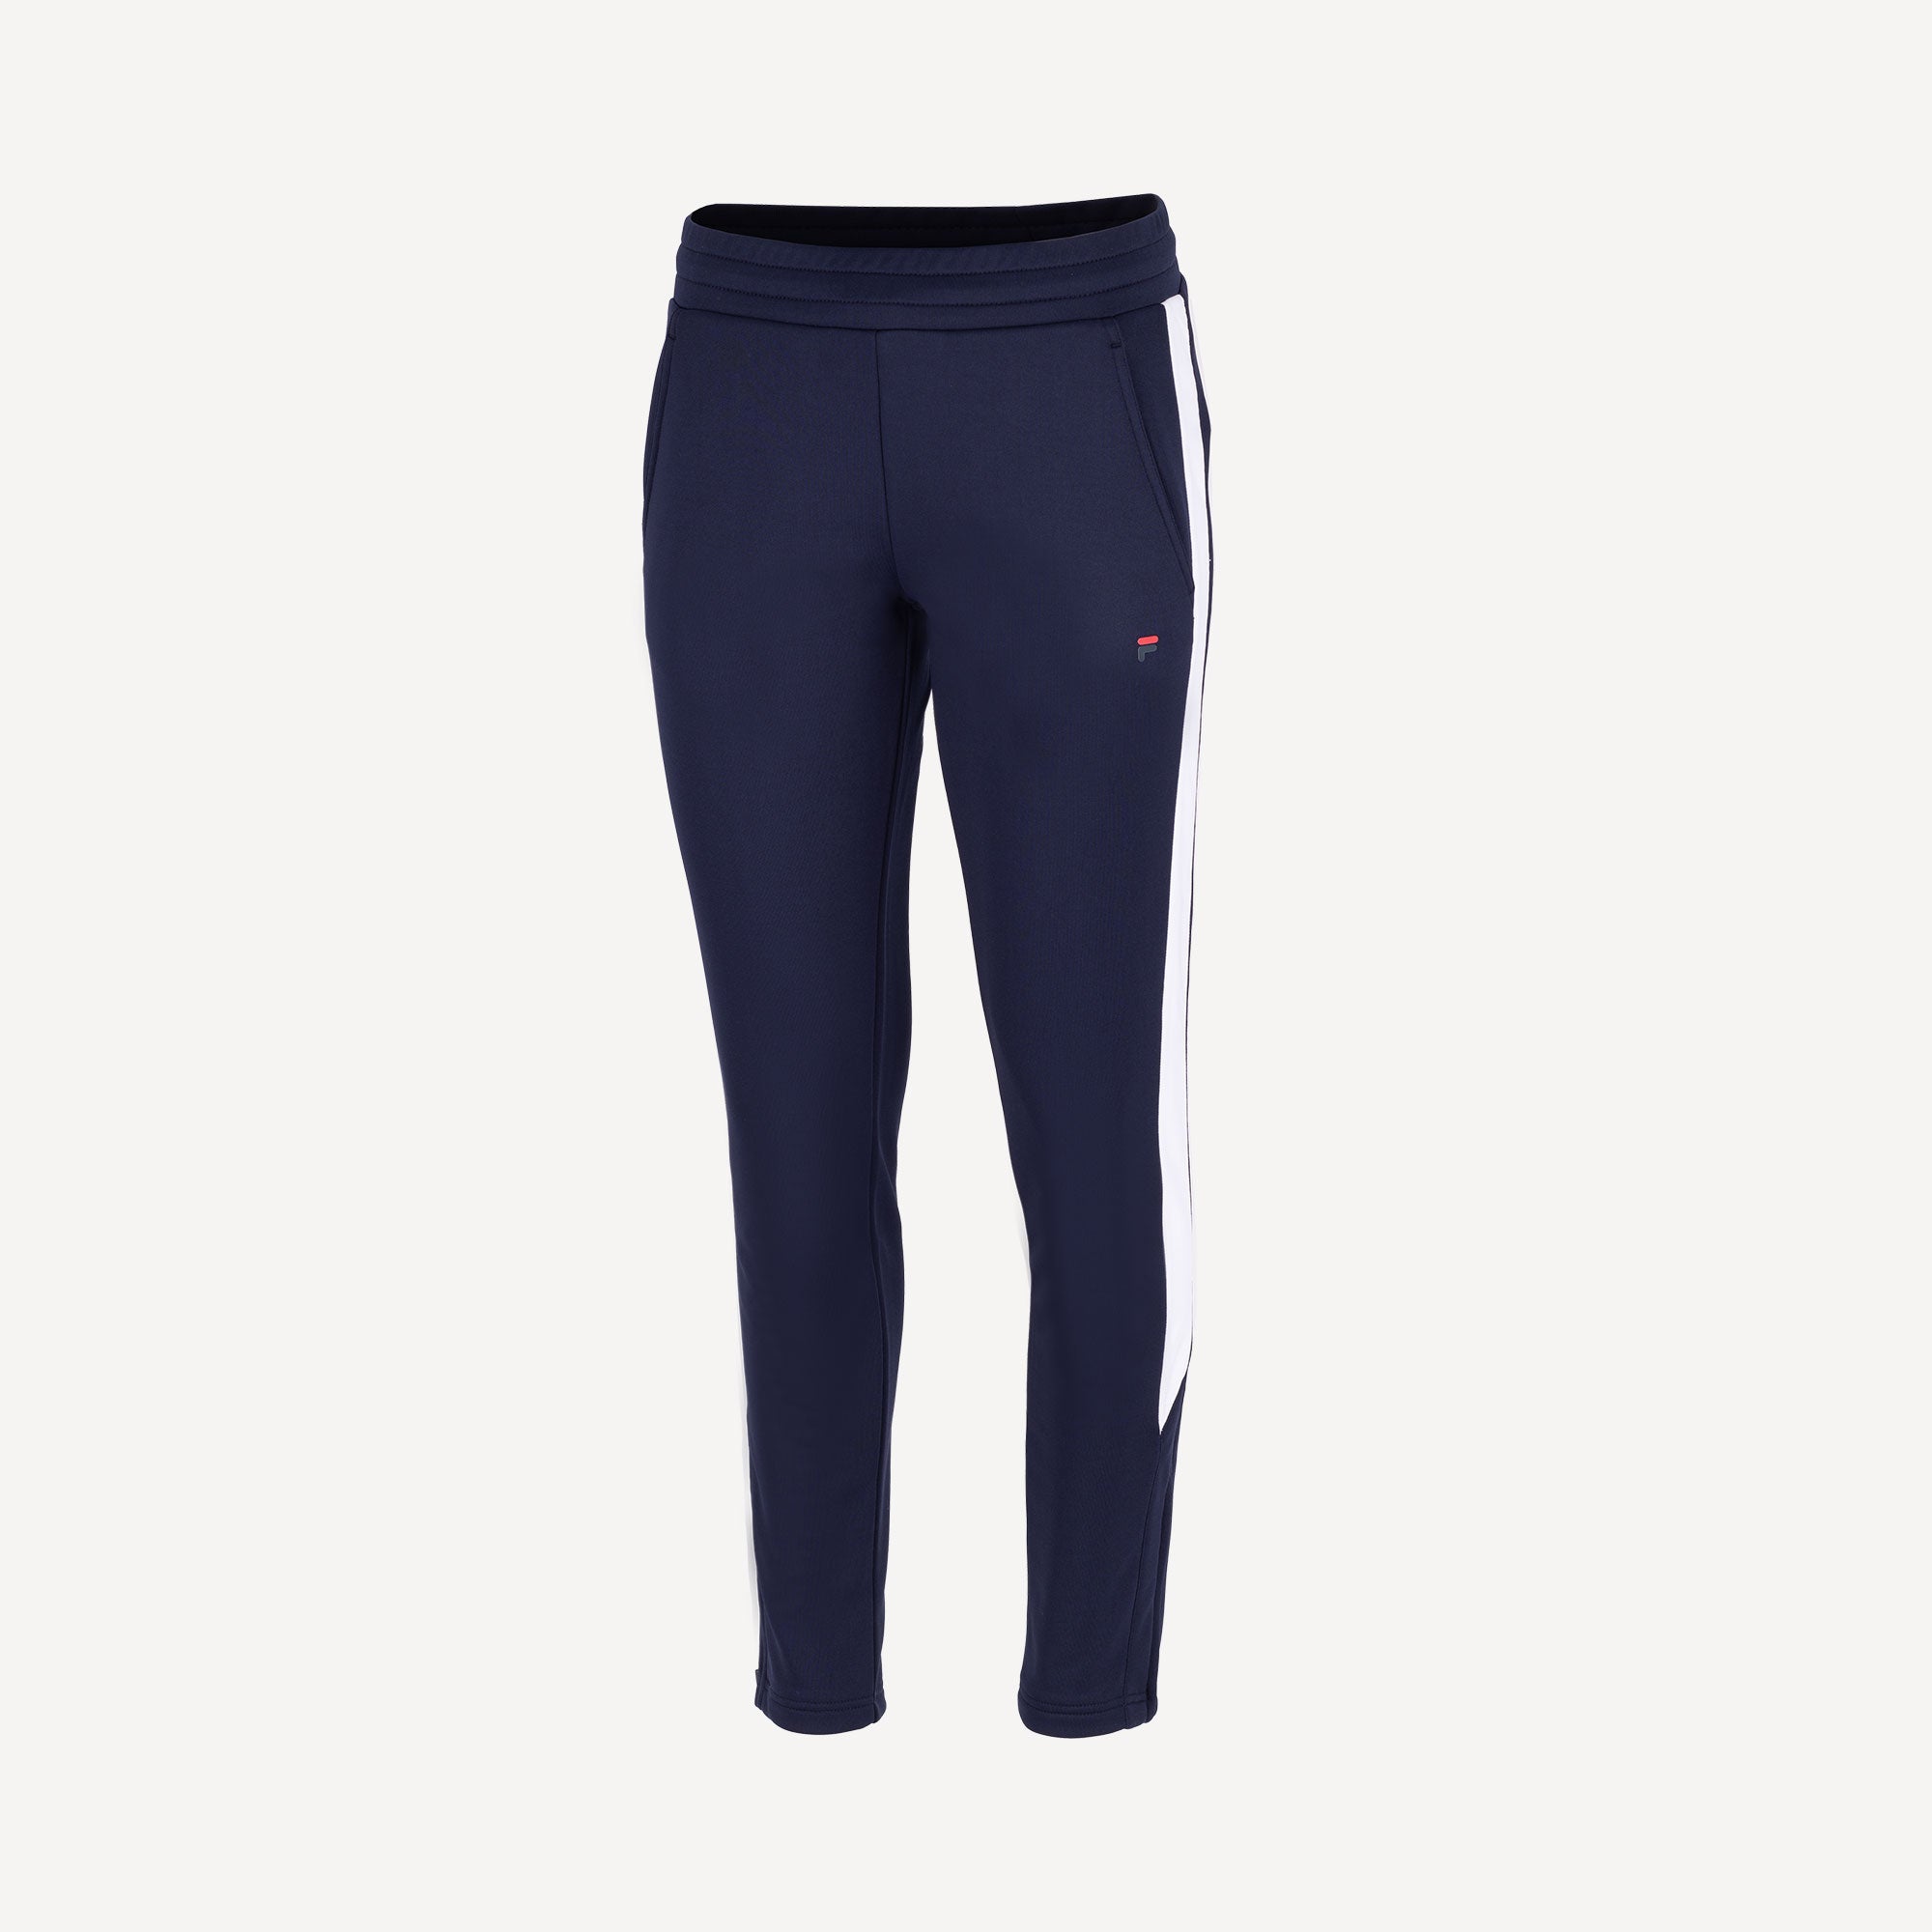 Fila Janice Women's Tennis Pants - Dark Blue (1)